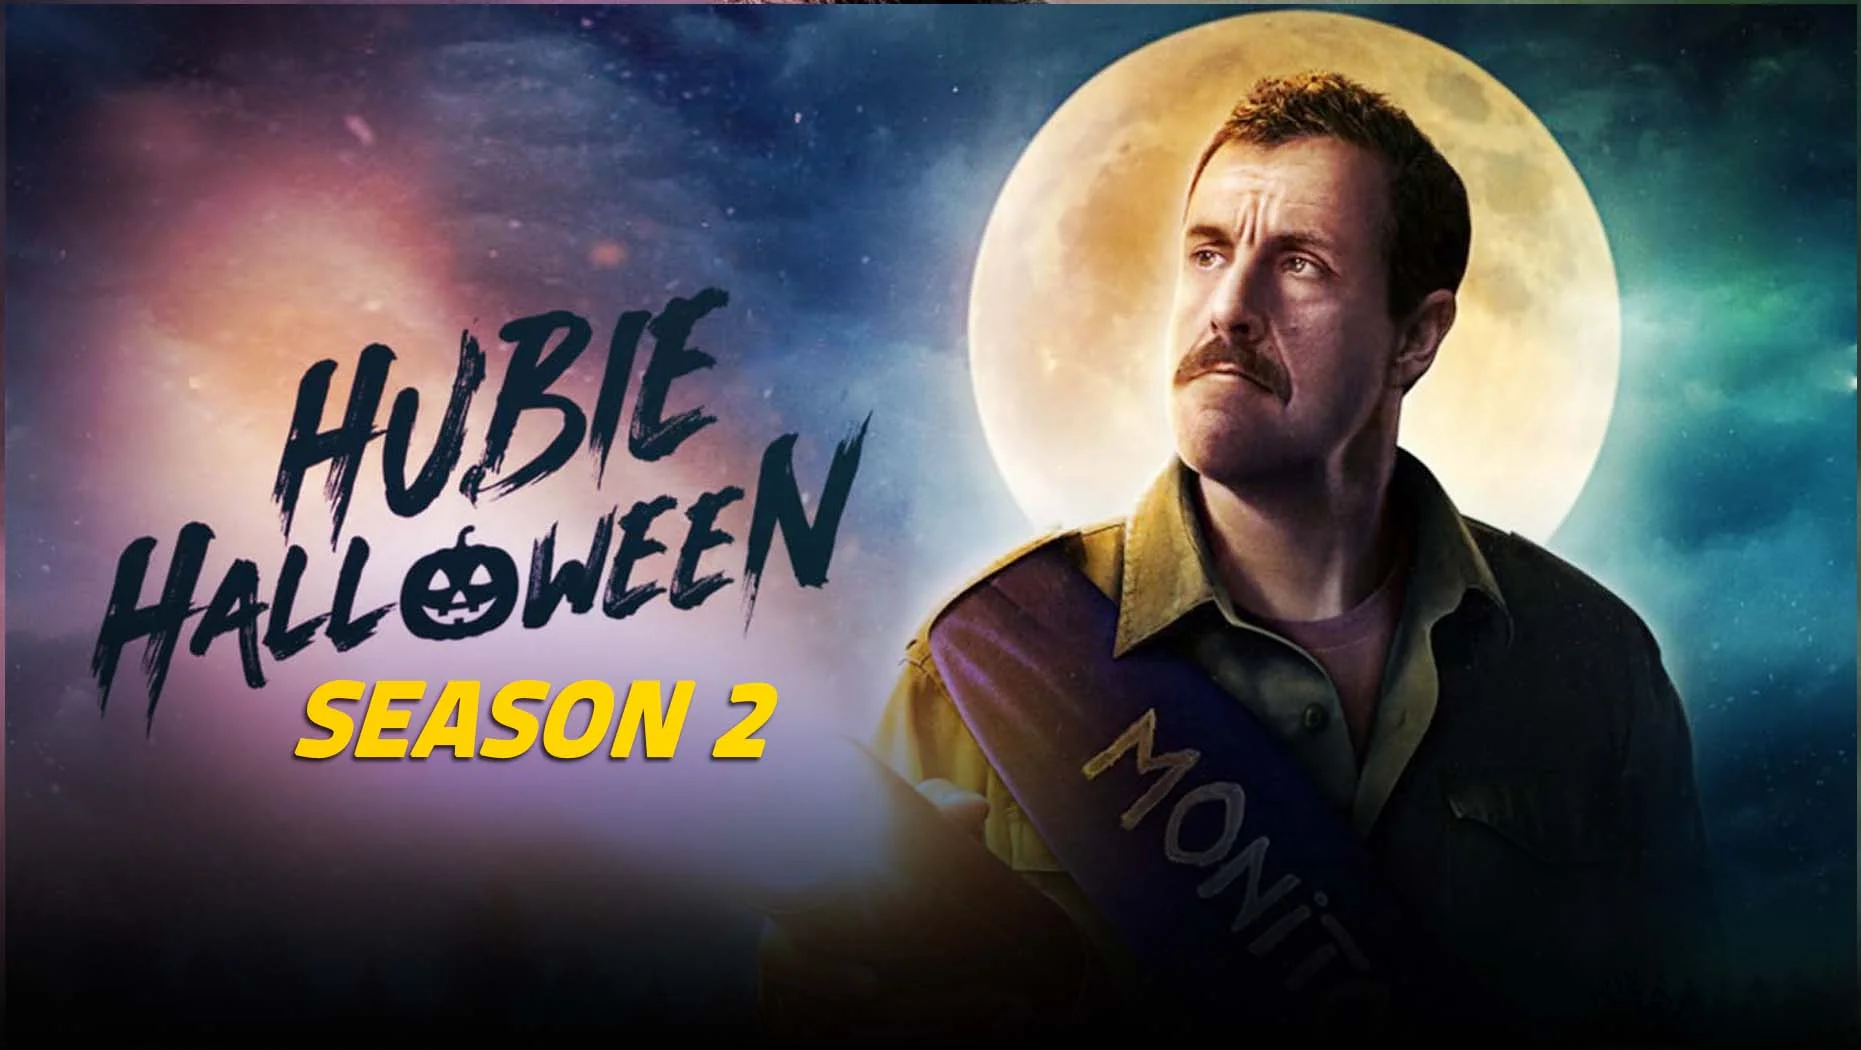 Hubie Halloween Season 2.jpg